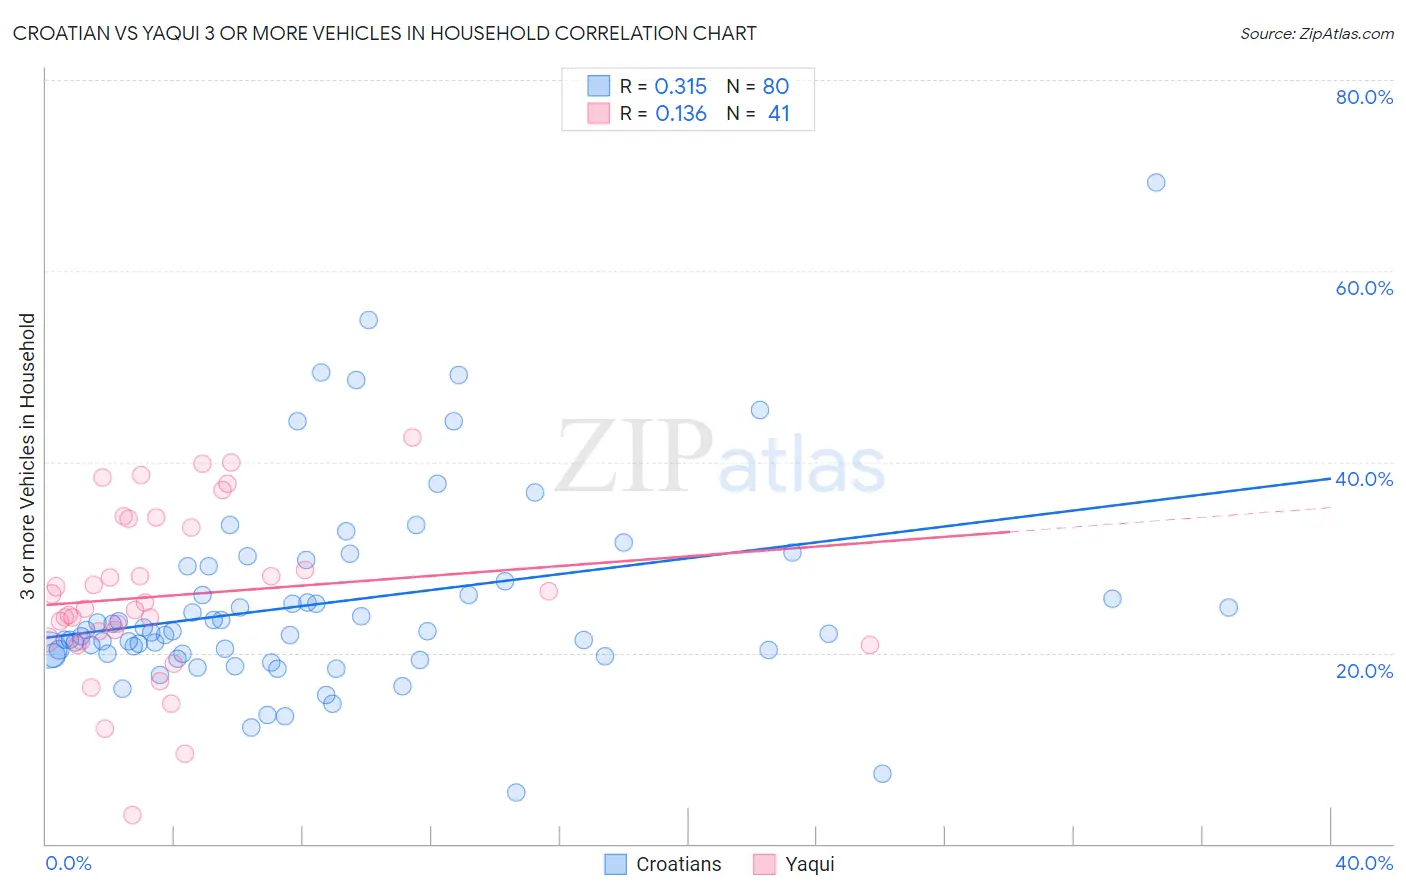 Croatian vs Yaqui 3 or more Vehicles in Household